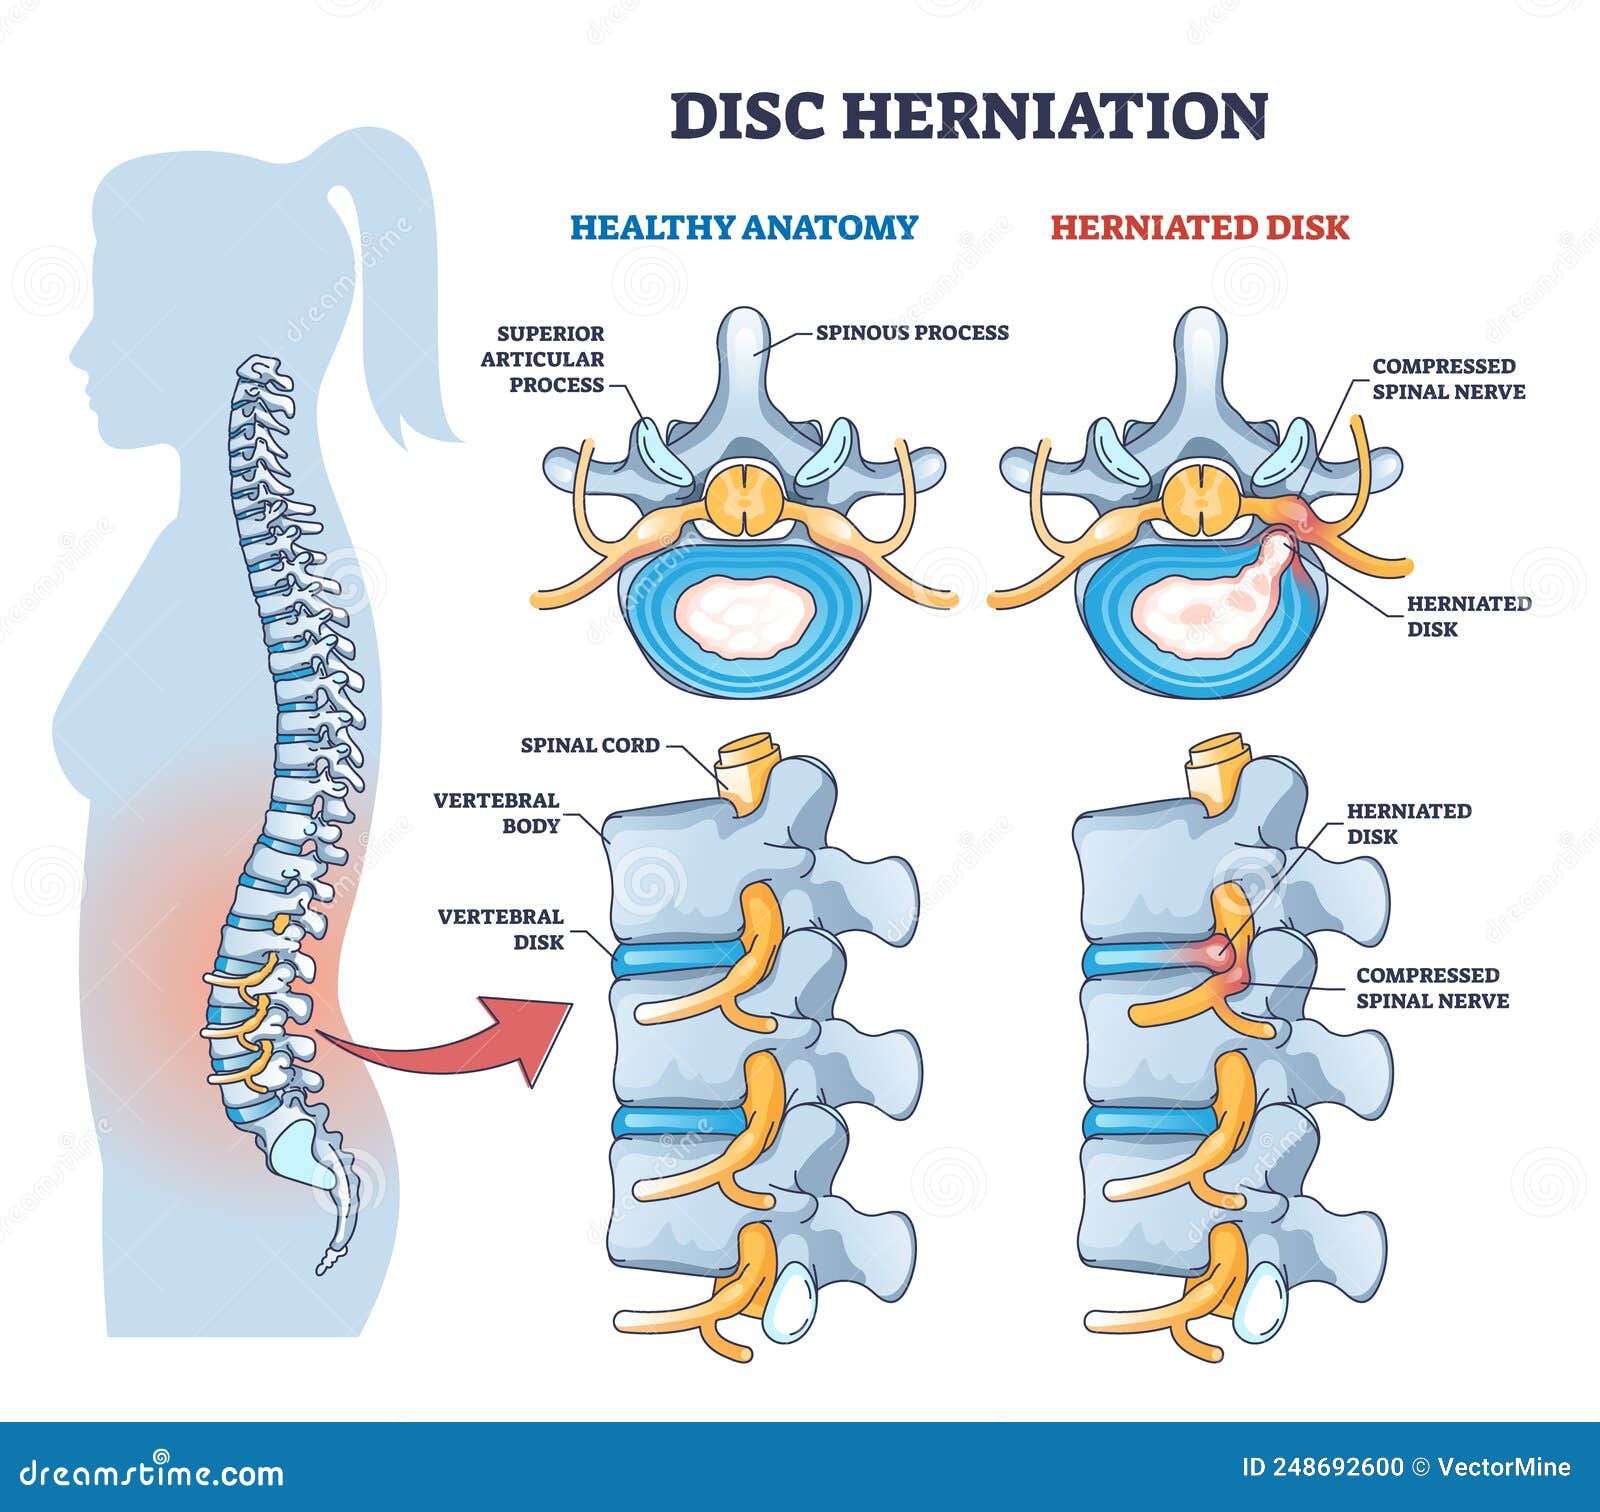 disc herniation or spine nerve compression vs healthy anatomy outline diagram